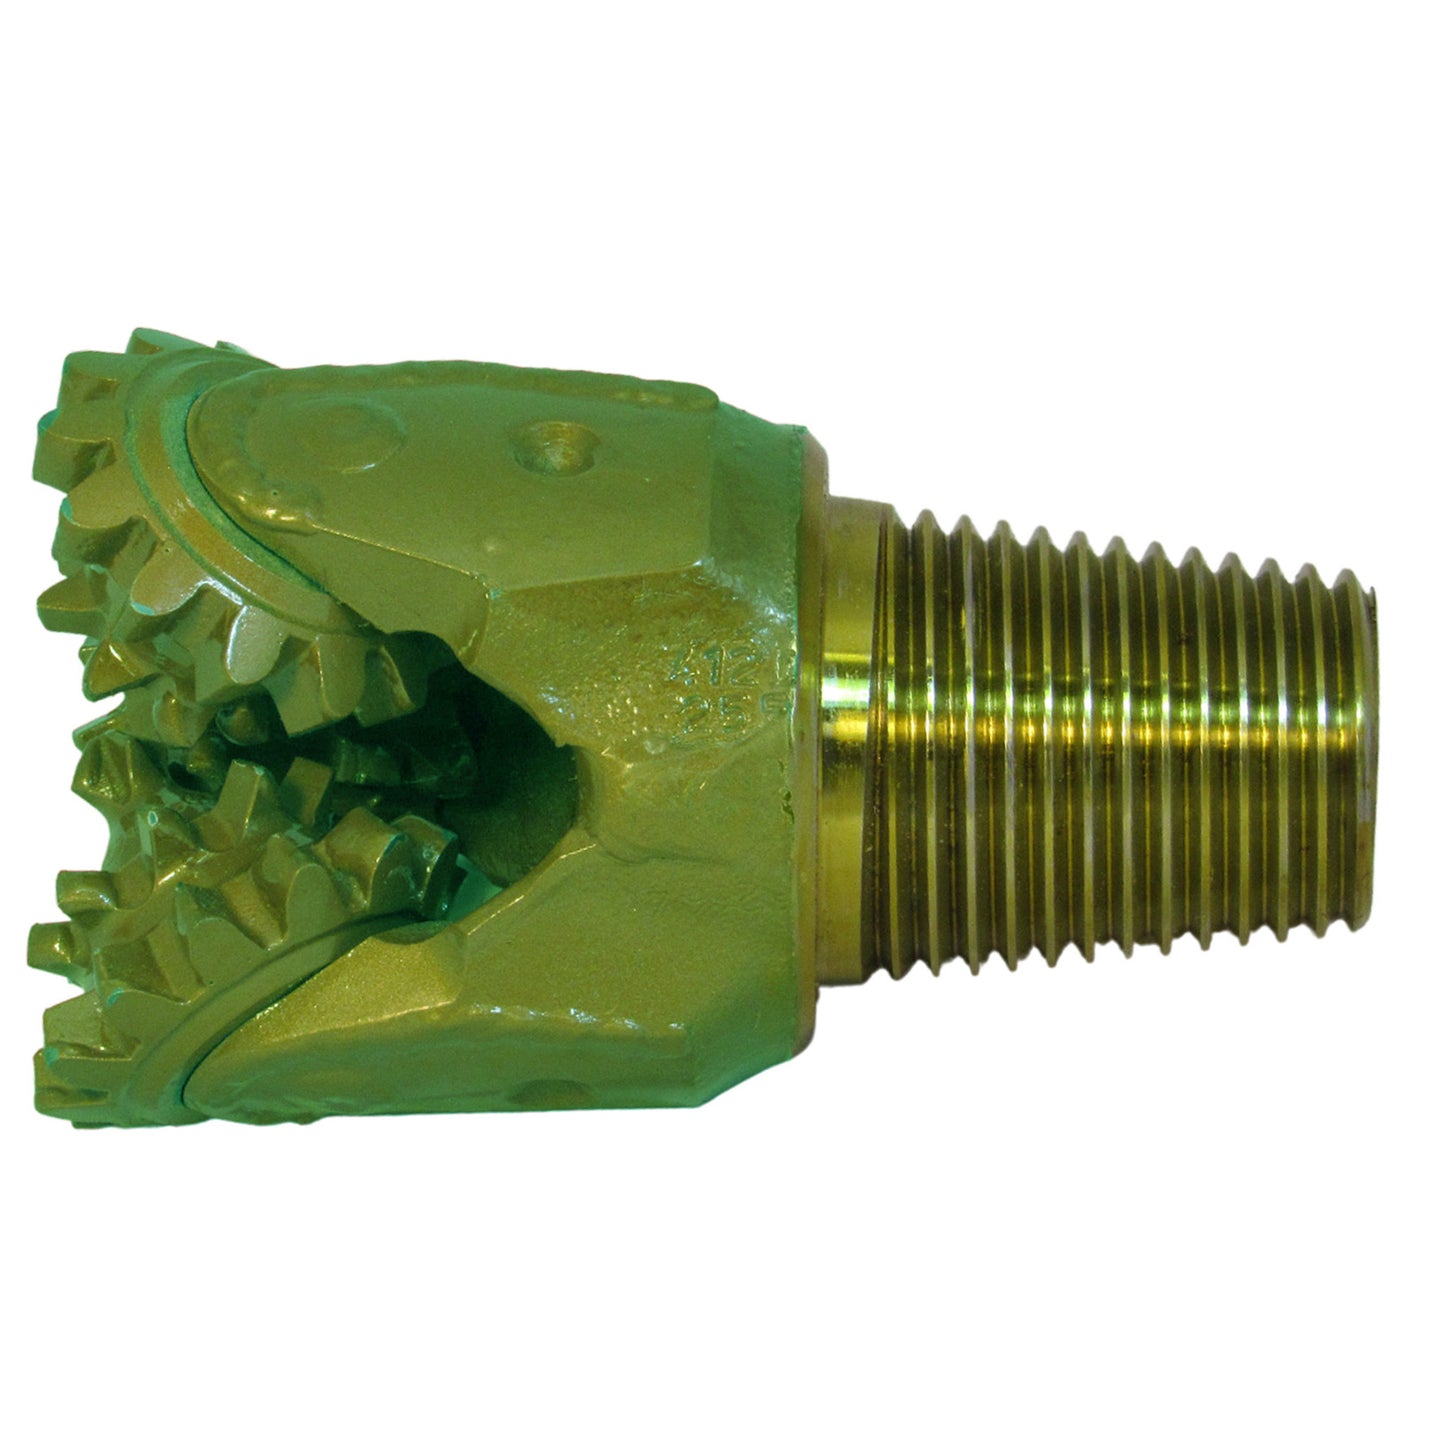 IADC 211 Rock Bit 4 ¼" Steel Tooth - 2 ⅜" Reg Pin